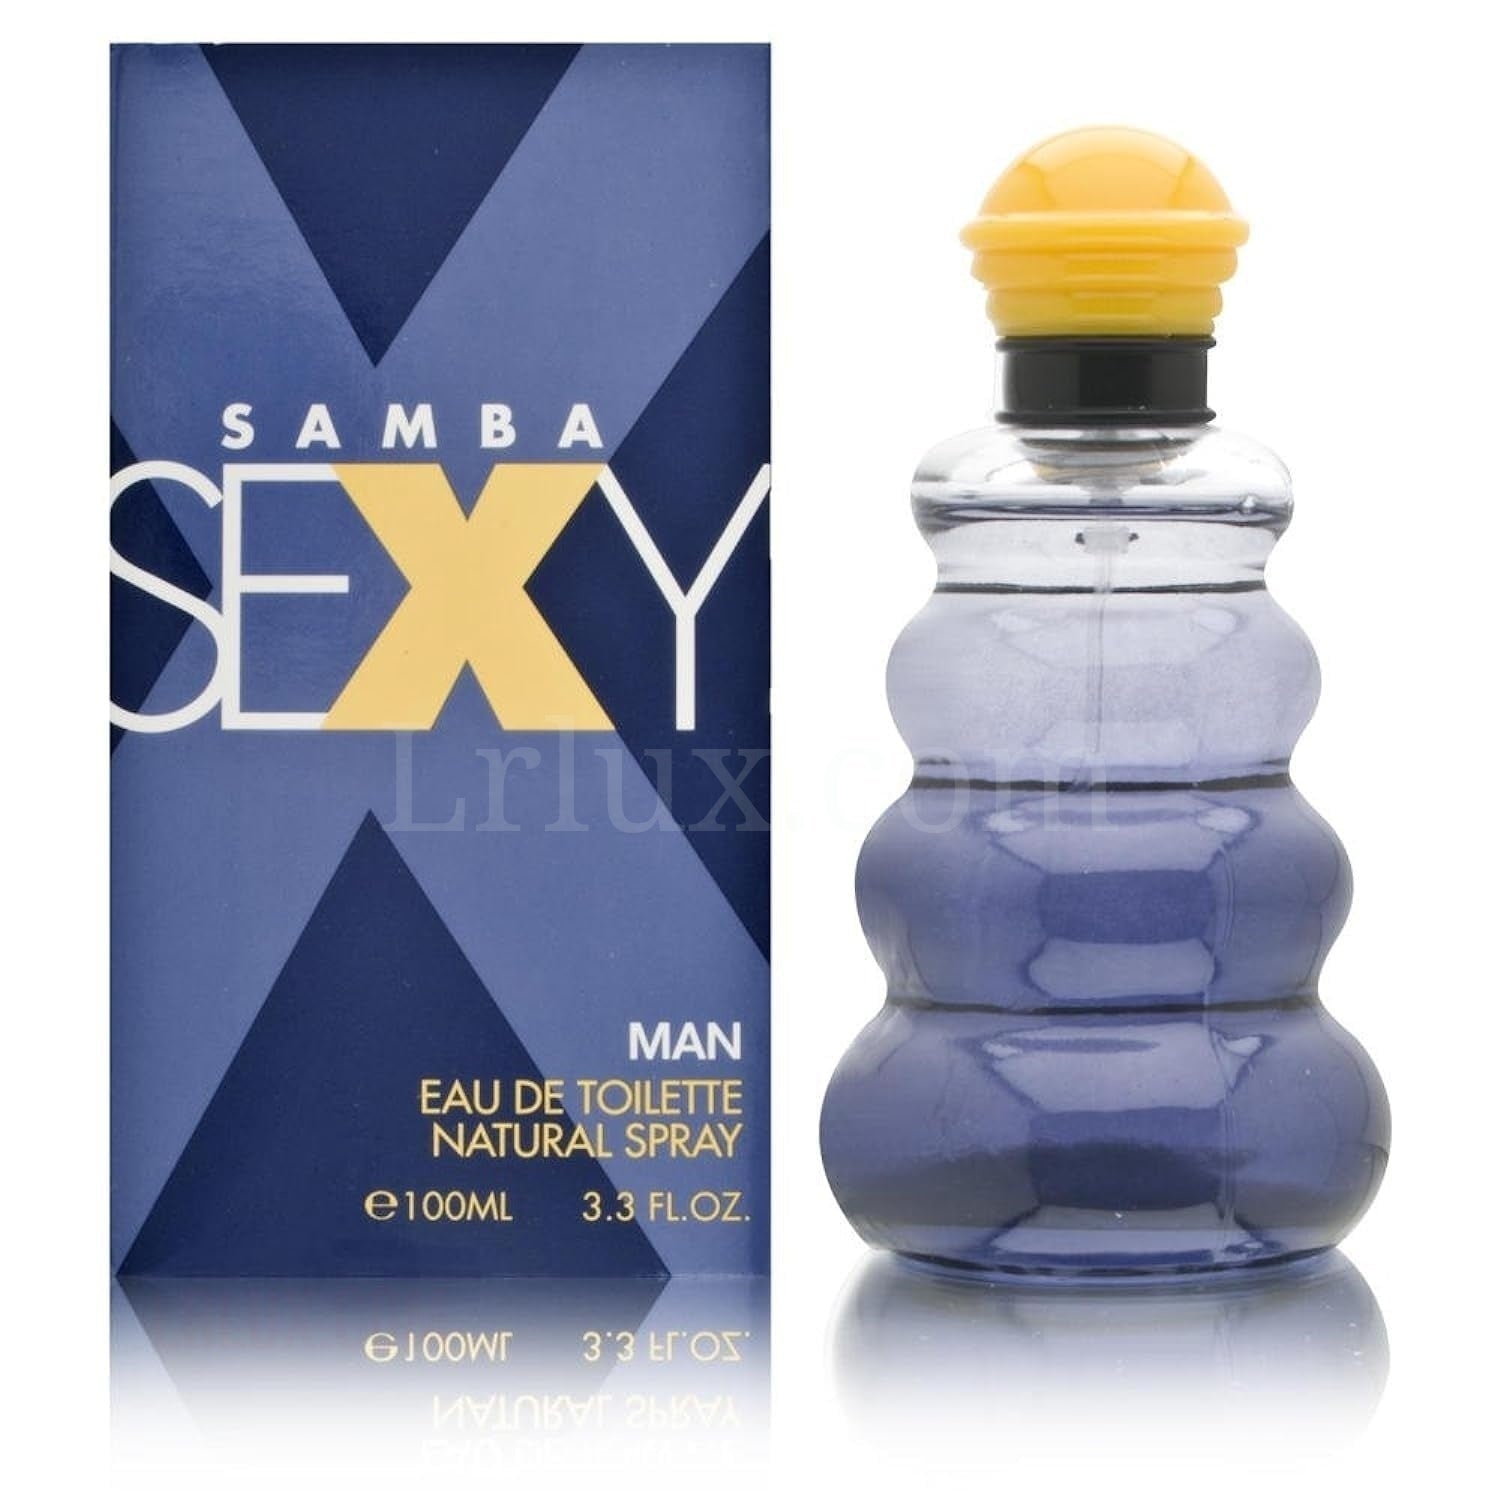 SAMBA SEXY MAN 3.4 OZ